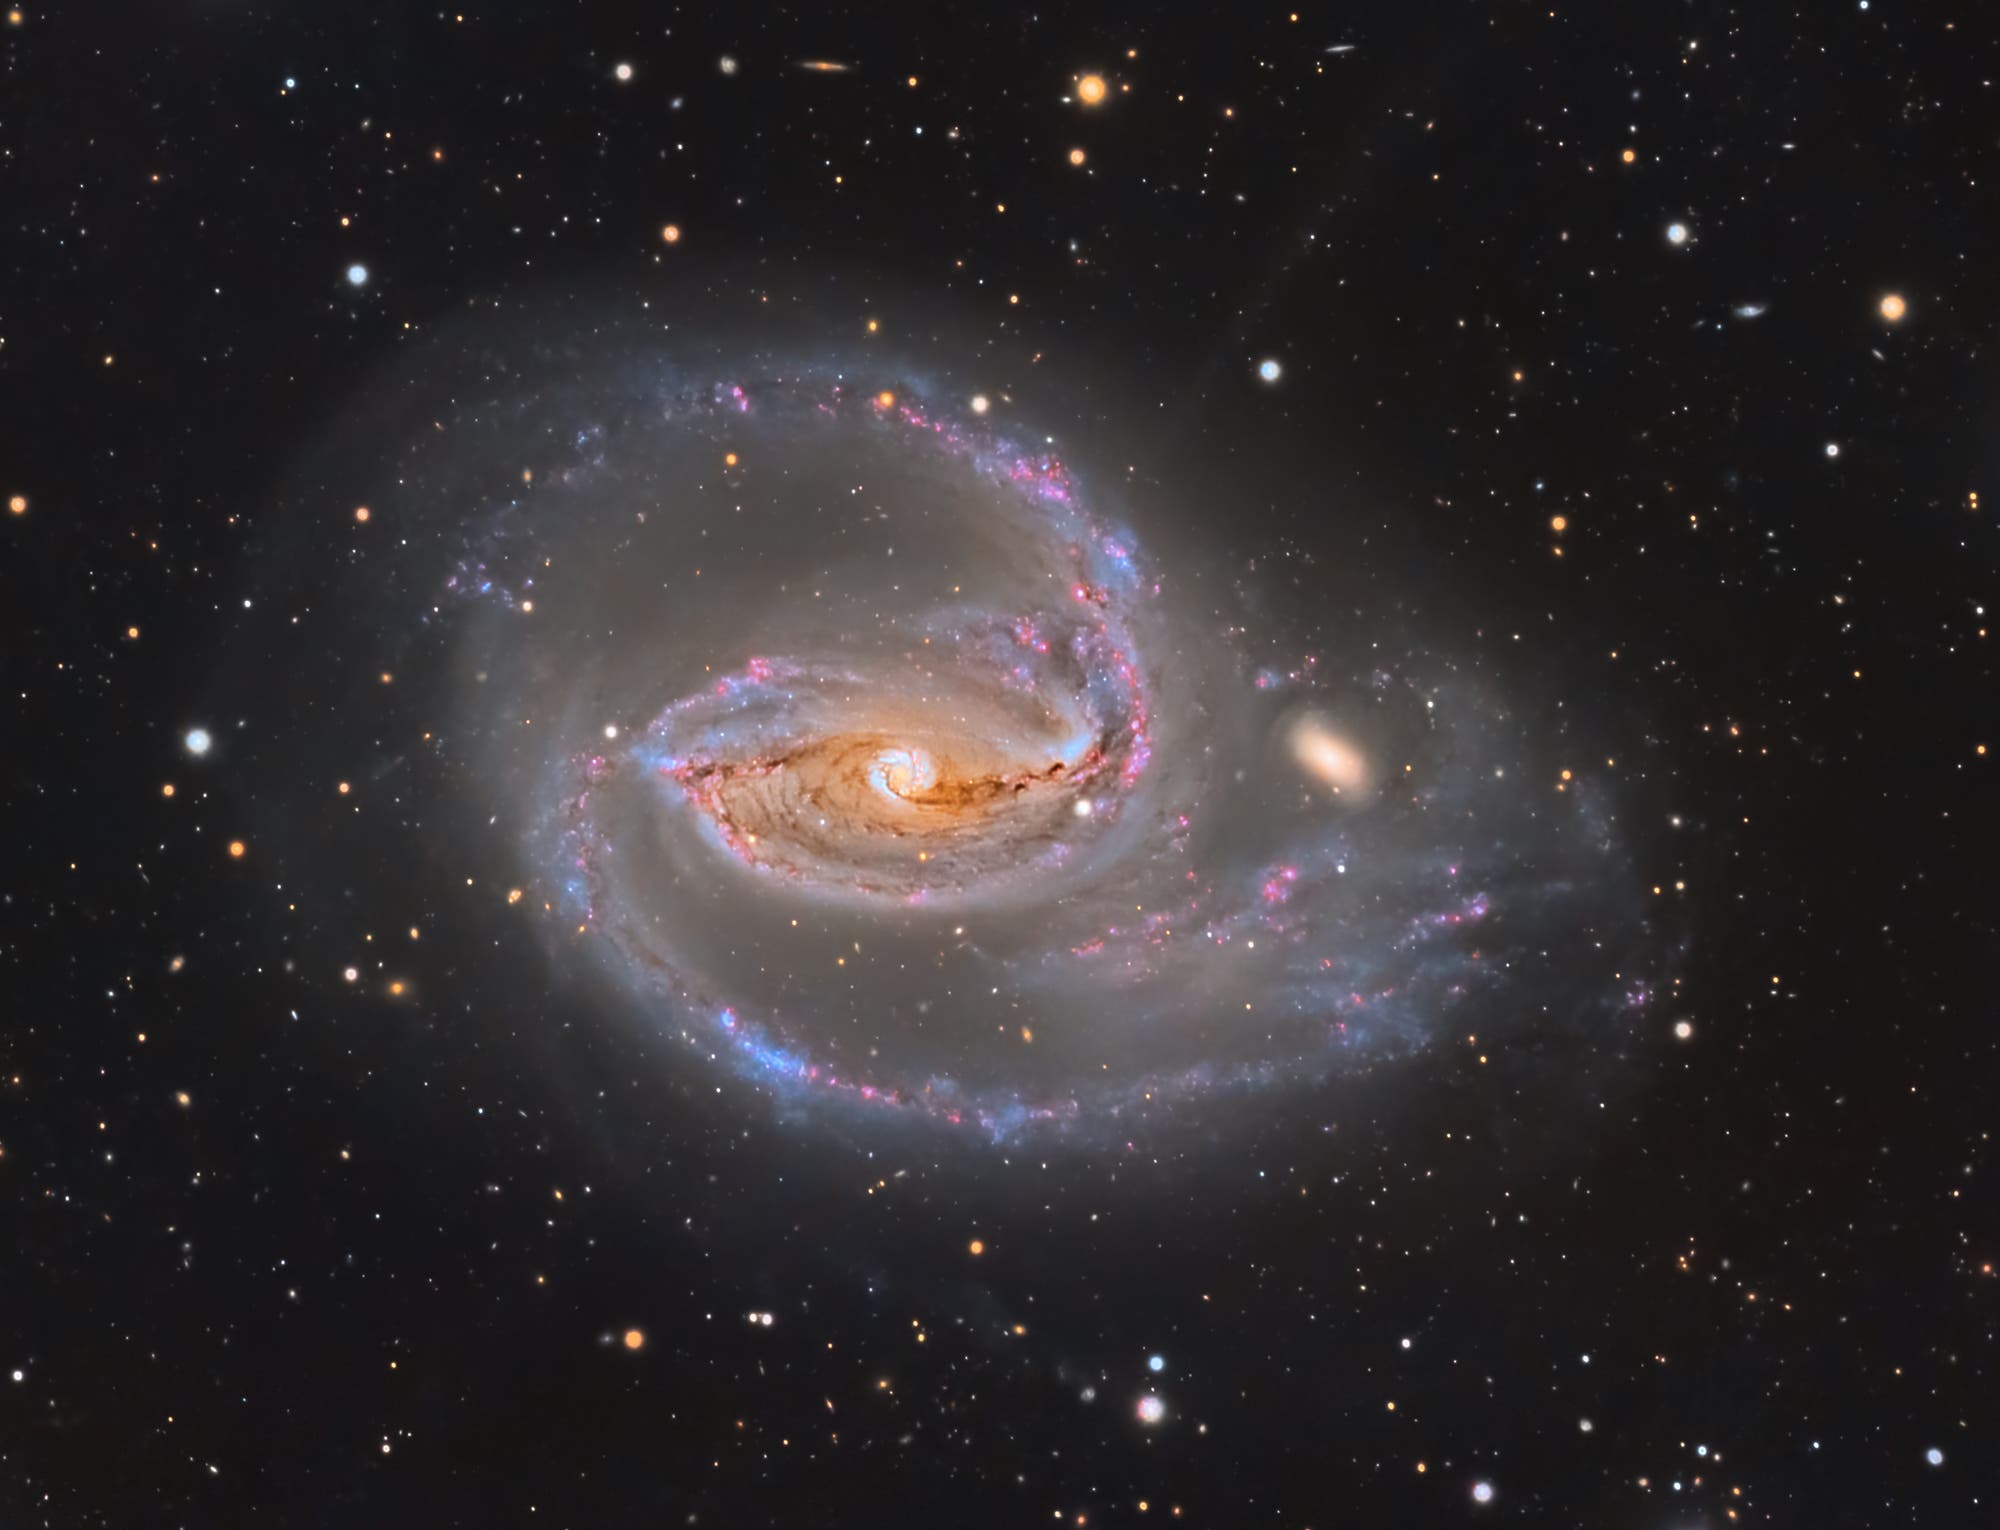 Das Auge des Horus - NGC 1097